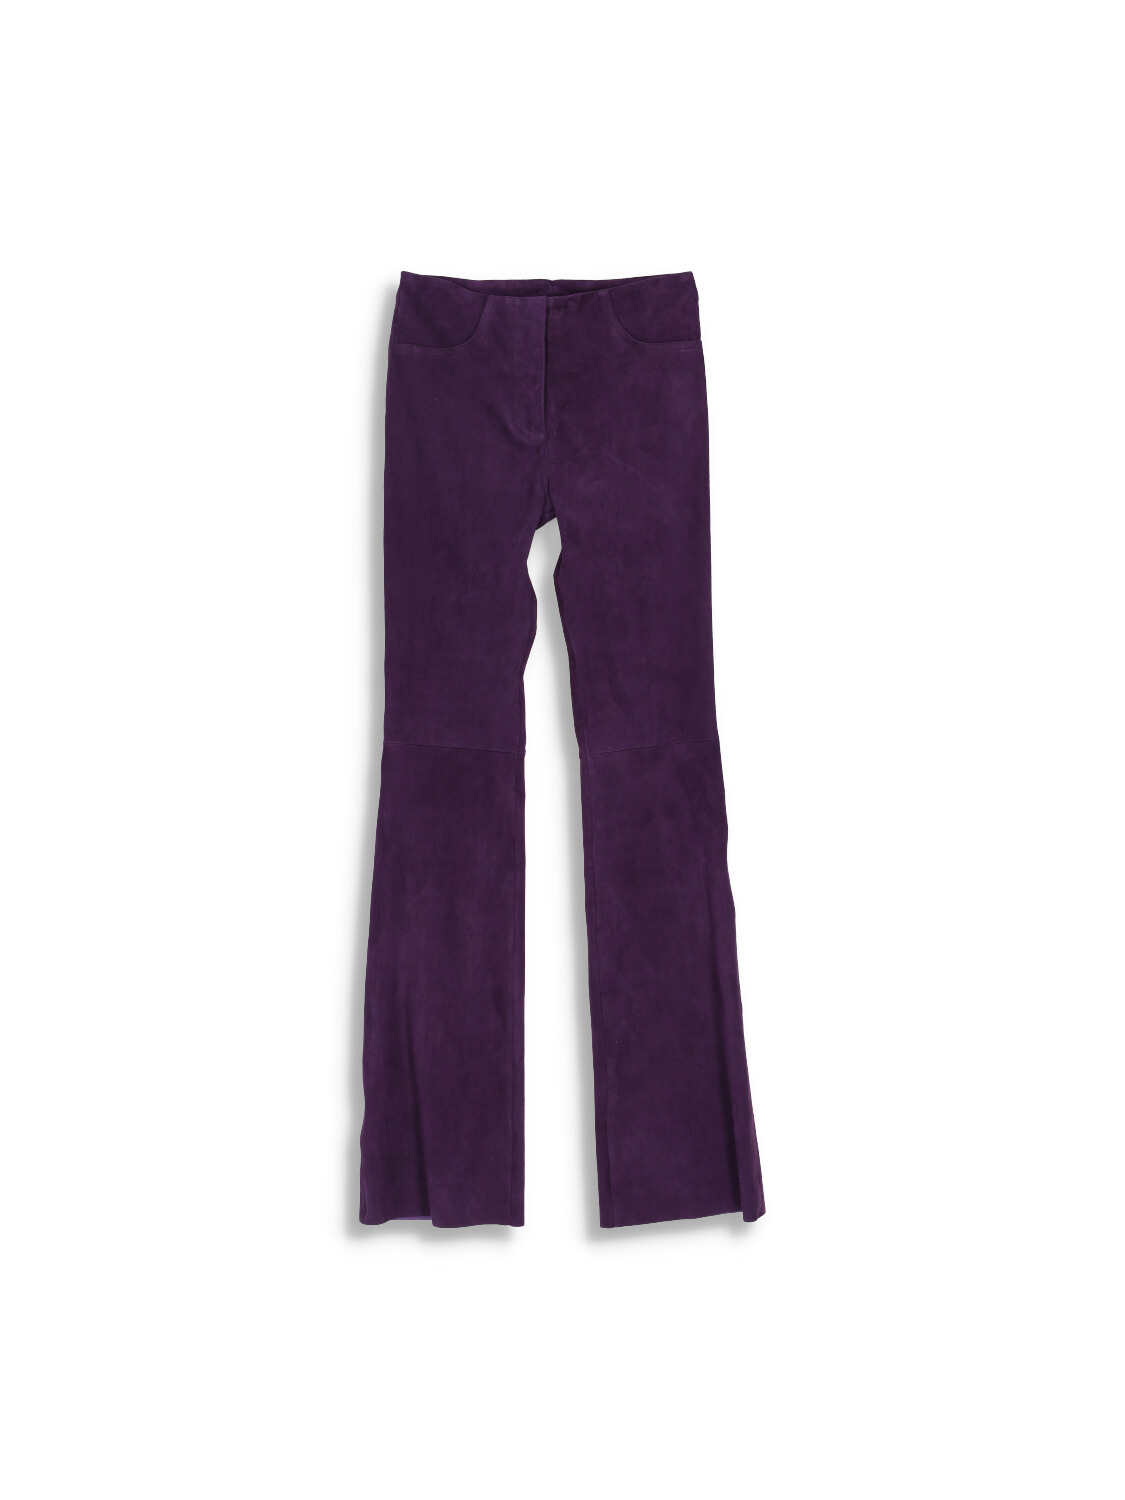 jitrois Pantalon Pika - Bootcuts in suede leather purple 40